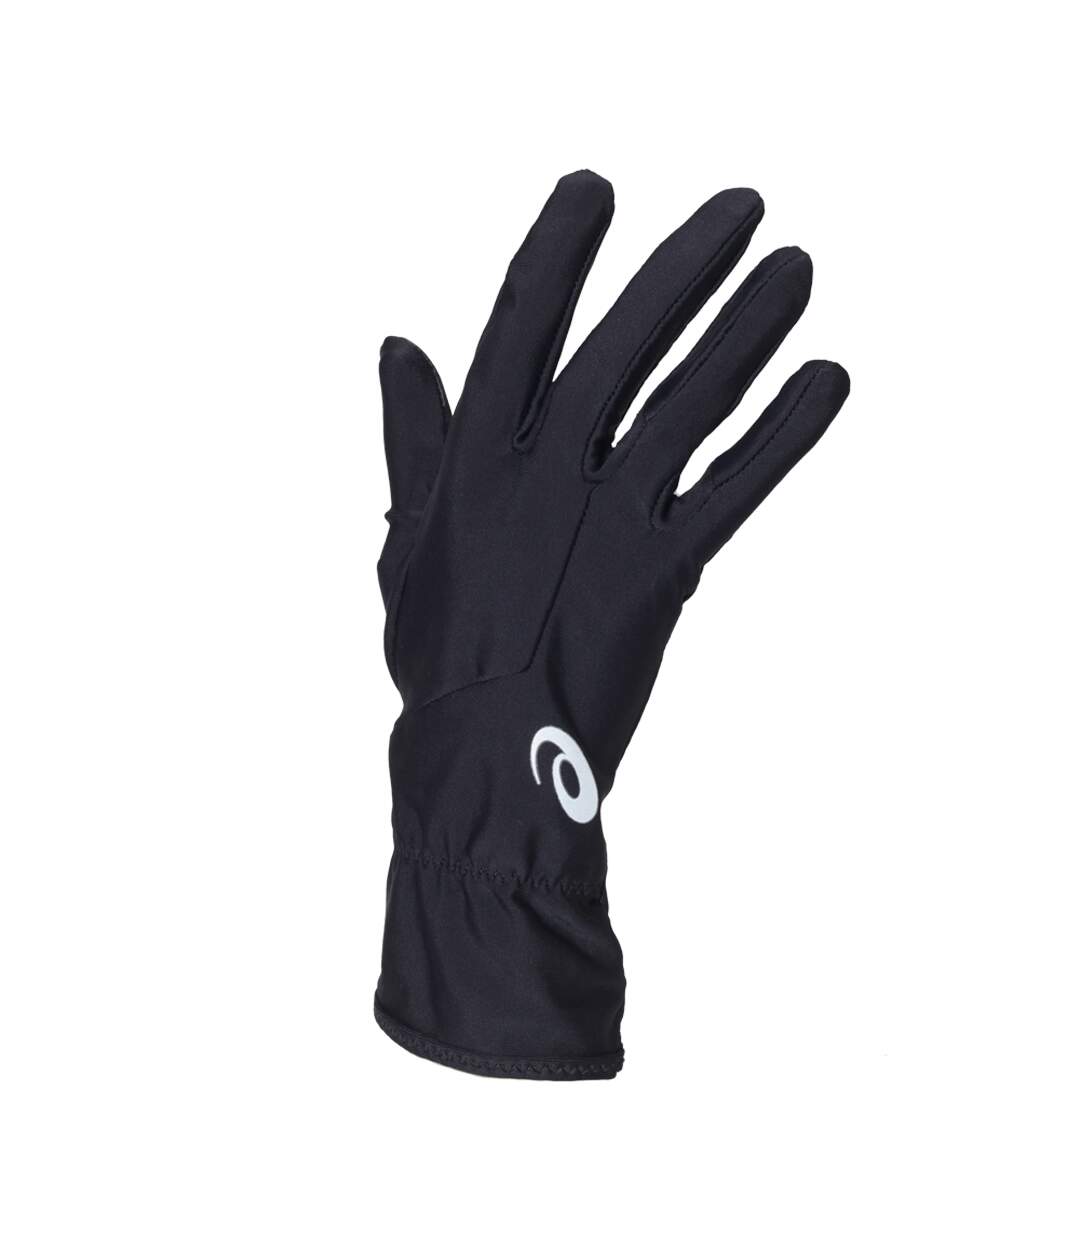 Asics Womens/Ladies Running Gloves (Black) - UTUT640